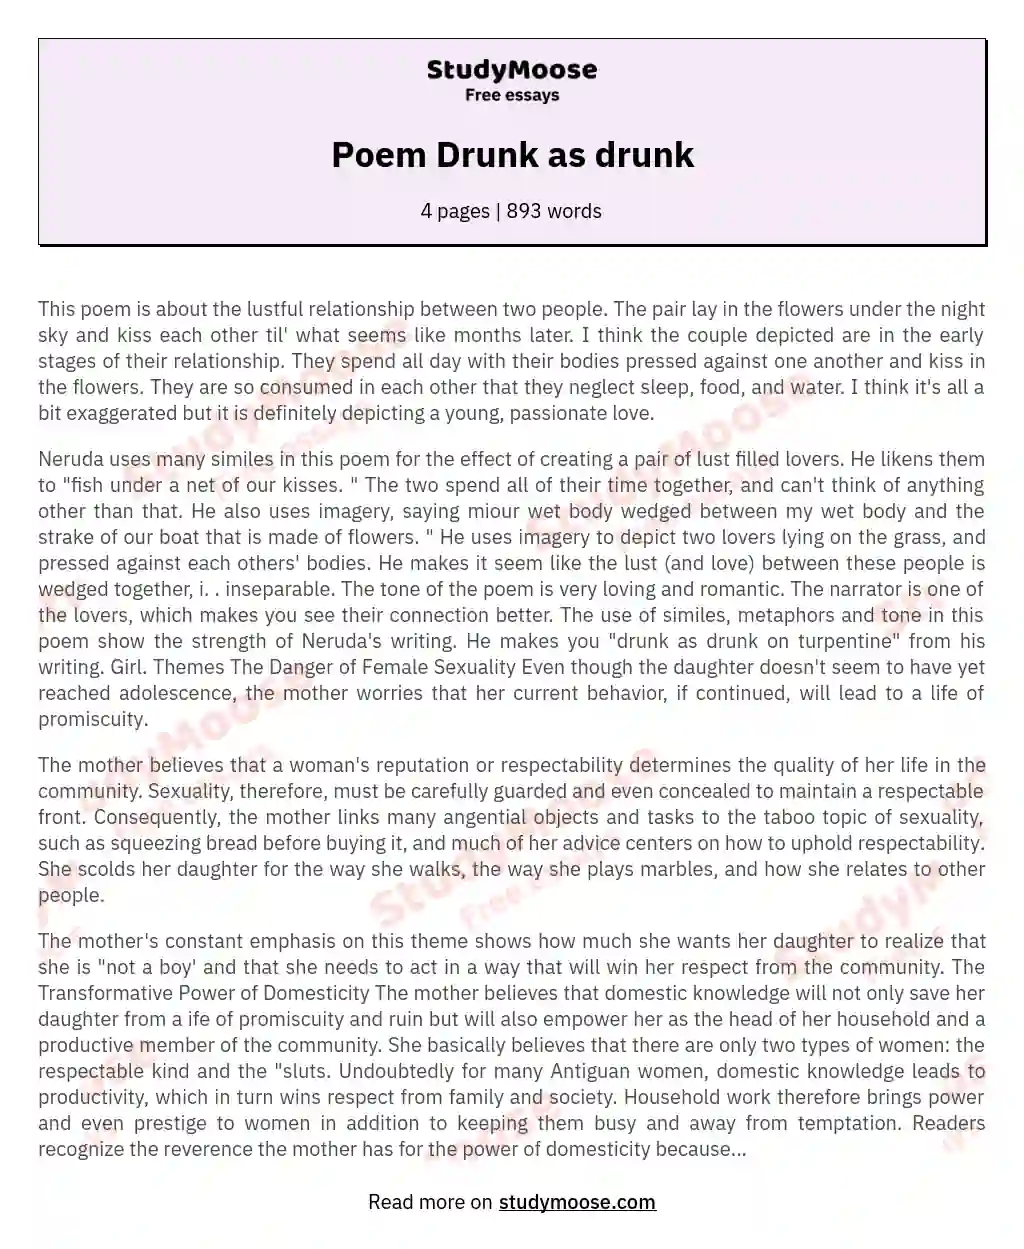 Poem Drunk as drunk essay